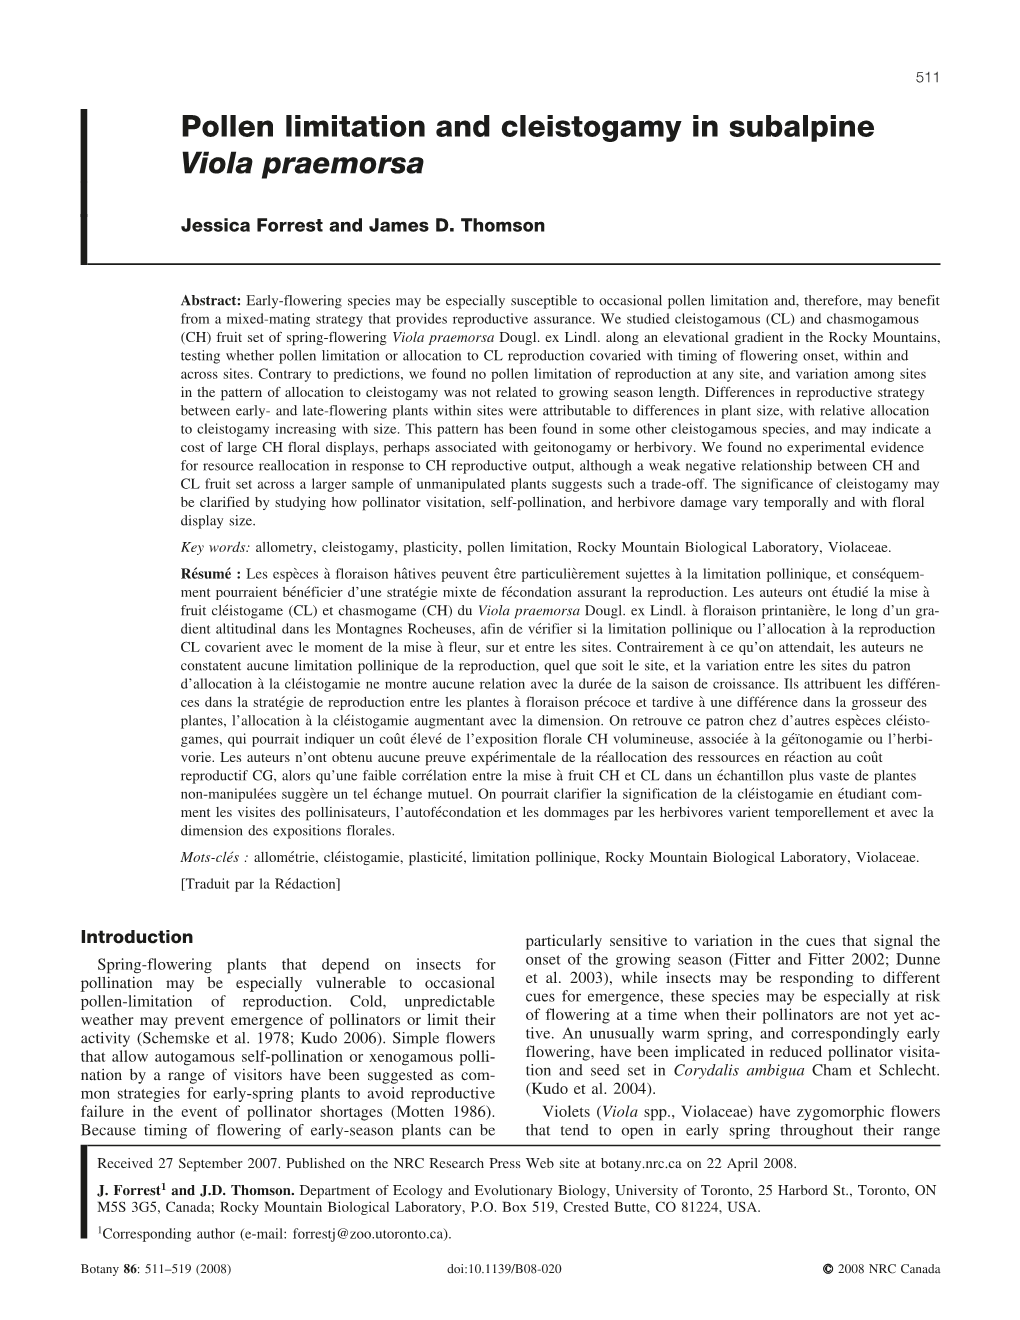 Pollen Limitation and Cleistogamy in Subalpine Viola Praemorsa